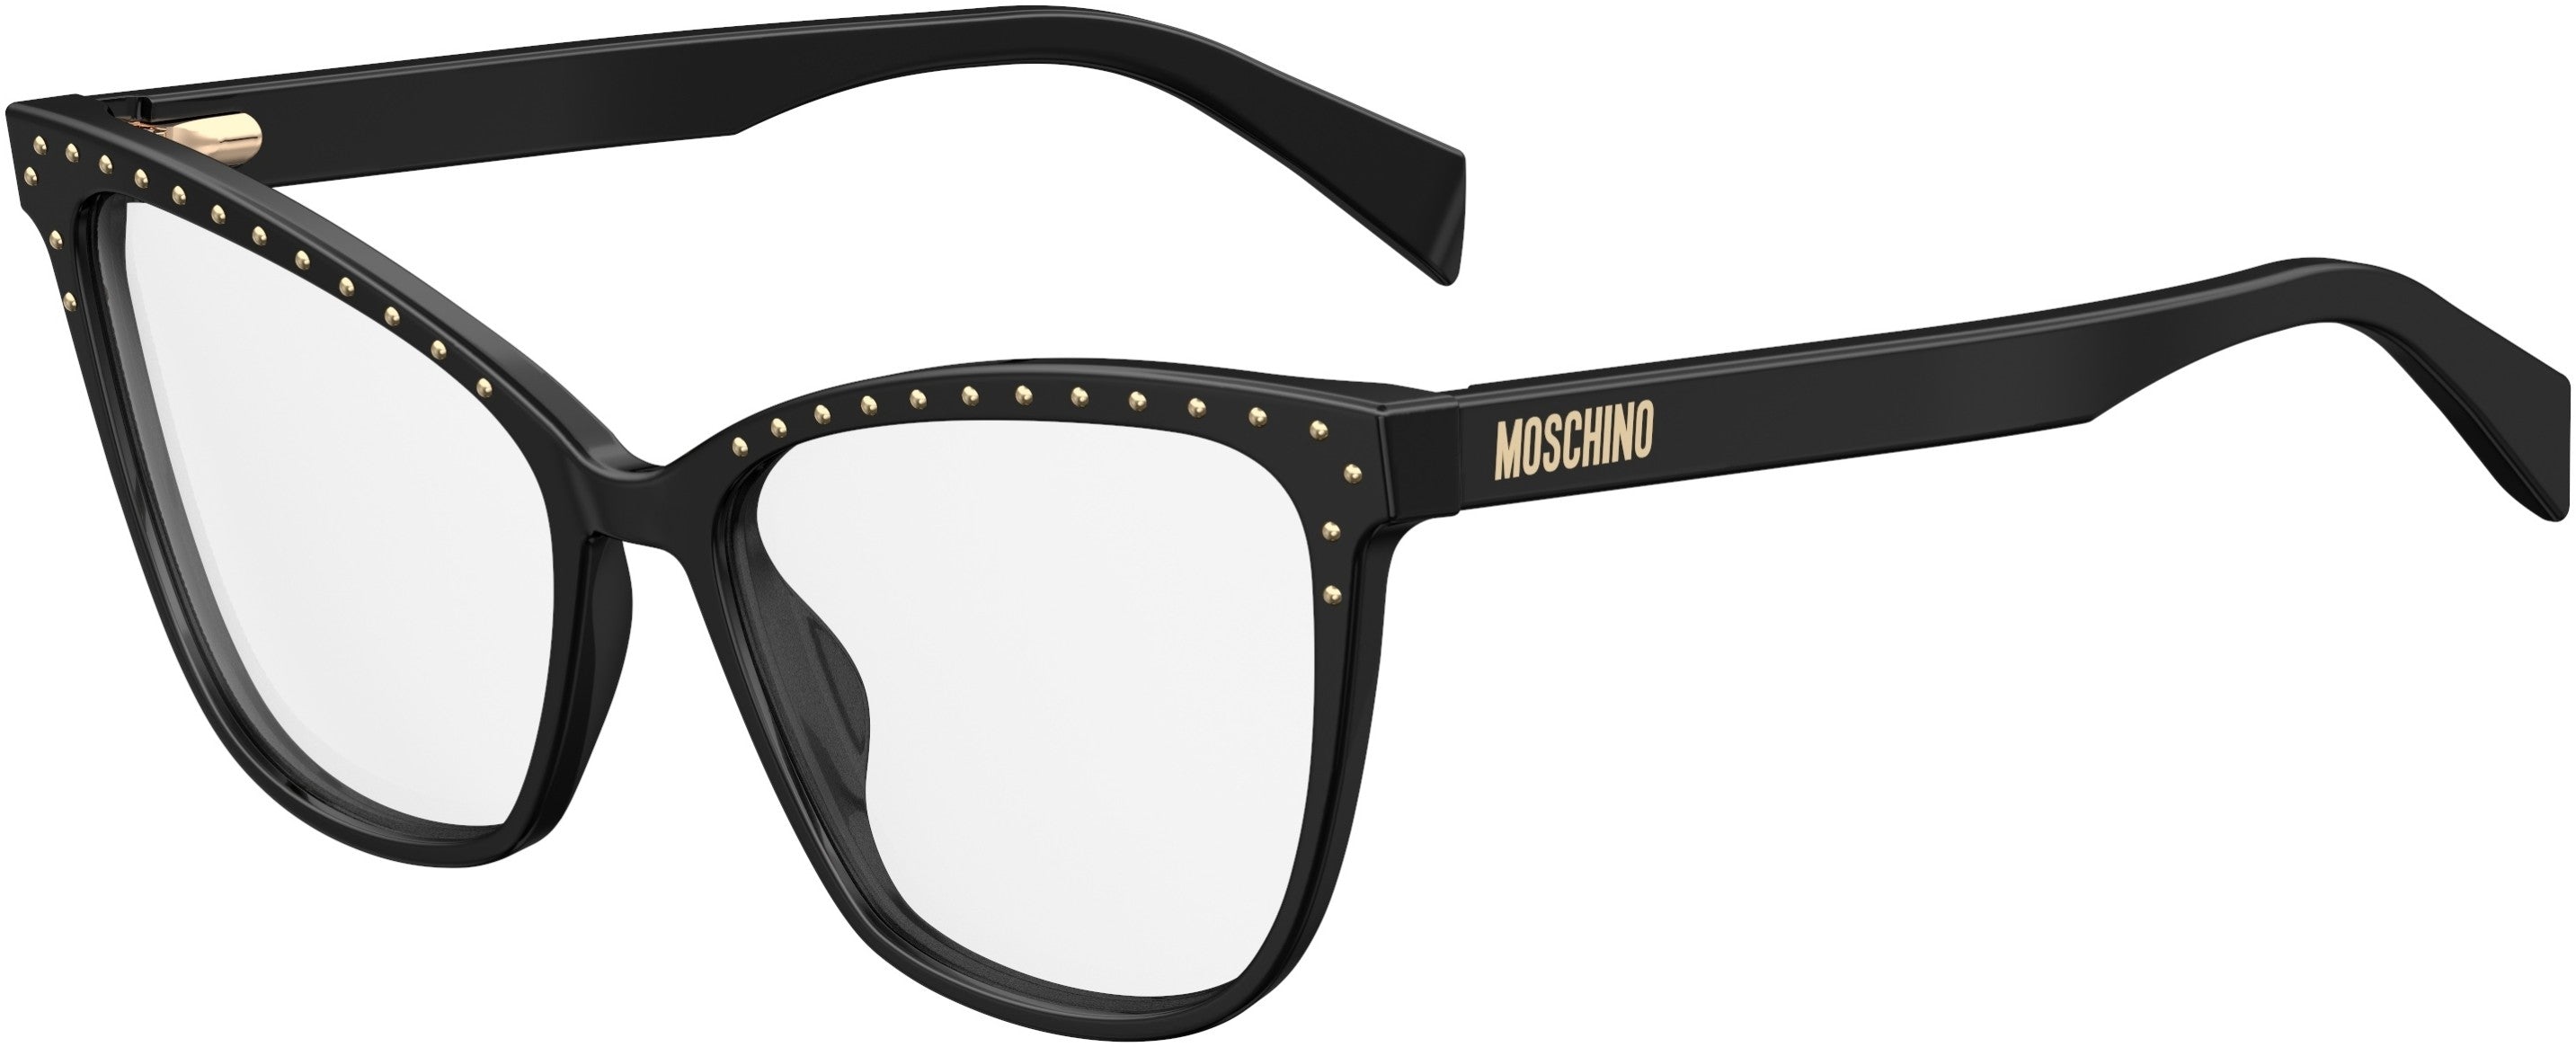  Moschino 505 Cat Eye/butterfly Eyeglasses 0807-0807  Black (00 Demo Lens)